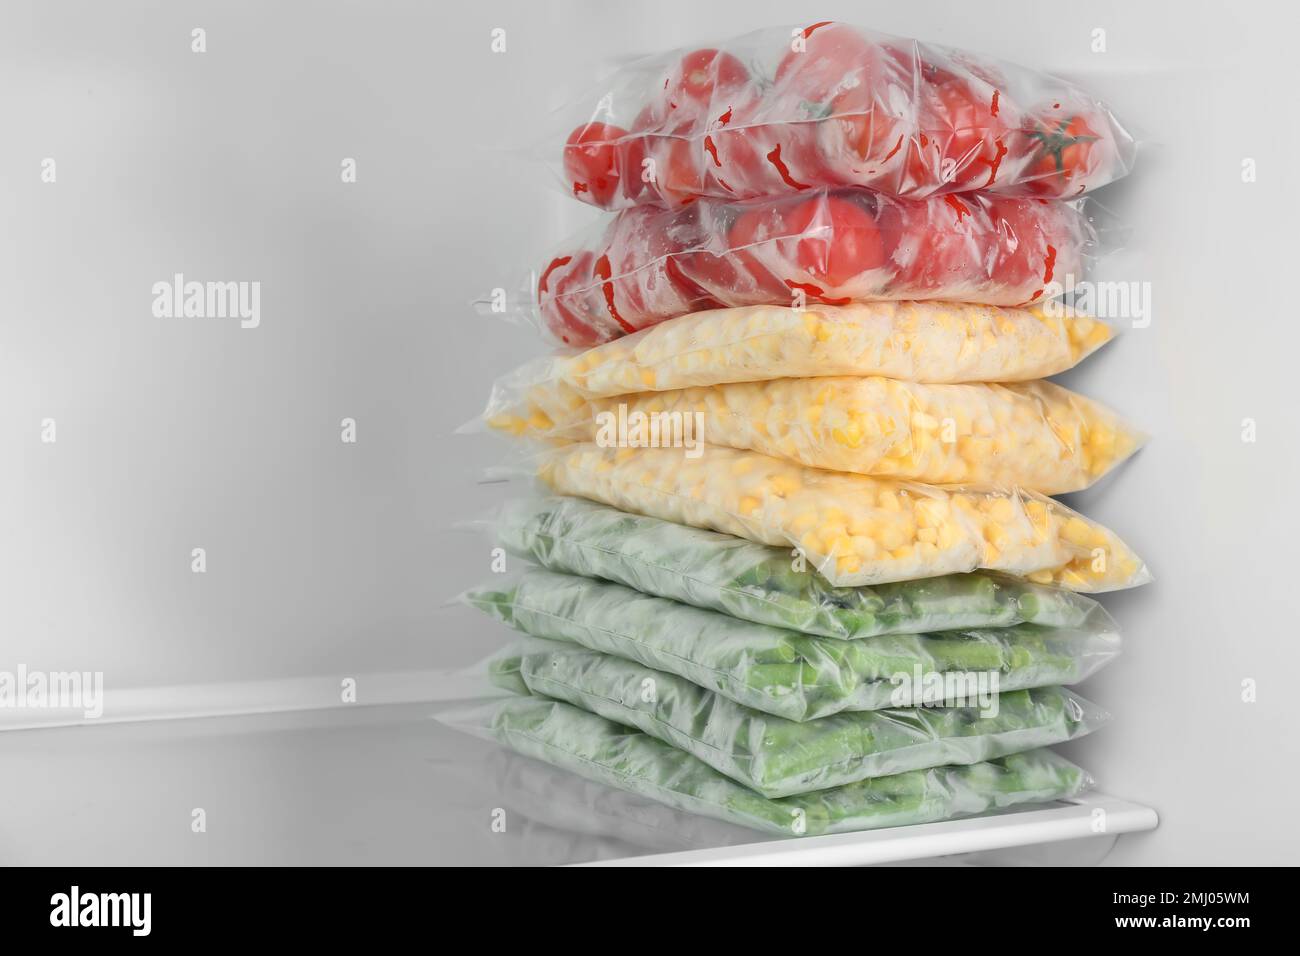 https://c8.alamy.com/comp/2MJ05WM/plastic-bags-with-different-frozen-vegetables-in-refrigerator-2MJ05WM.jpg